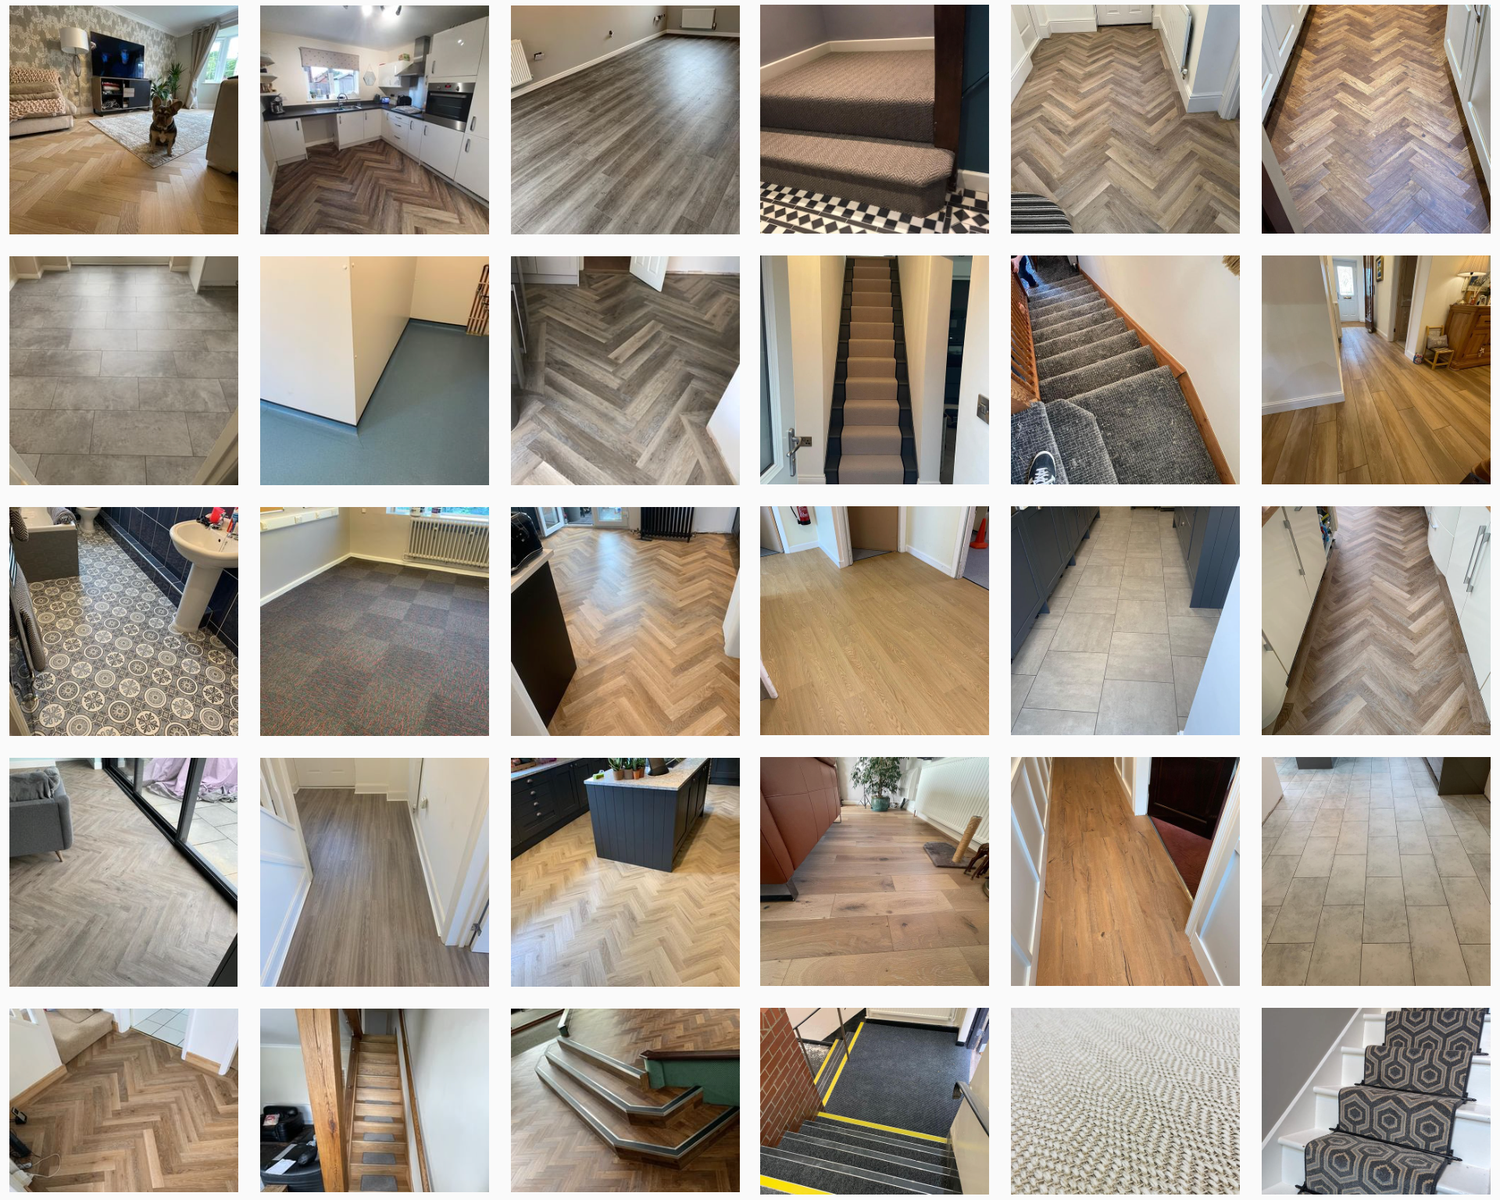 Oates Flooring & Blinds social media work flooring portfolio from Facebook and Instagram